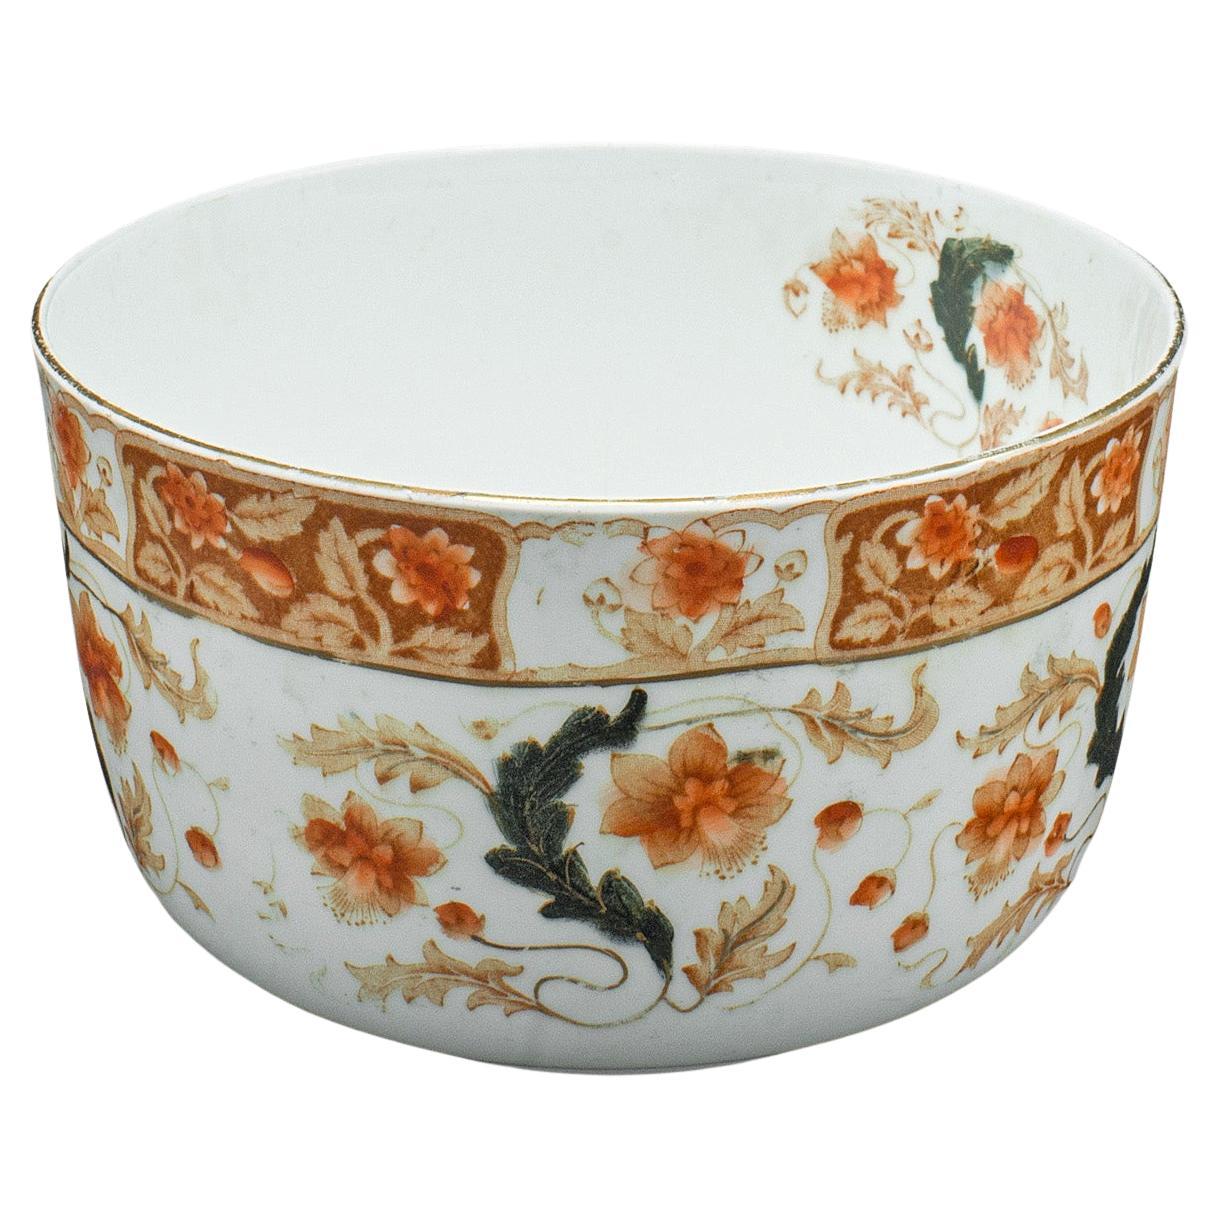 Antique Decorative Bowl, Continental, Ceramic, Serving Dish, Victorian, C.1900 For Sale